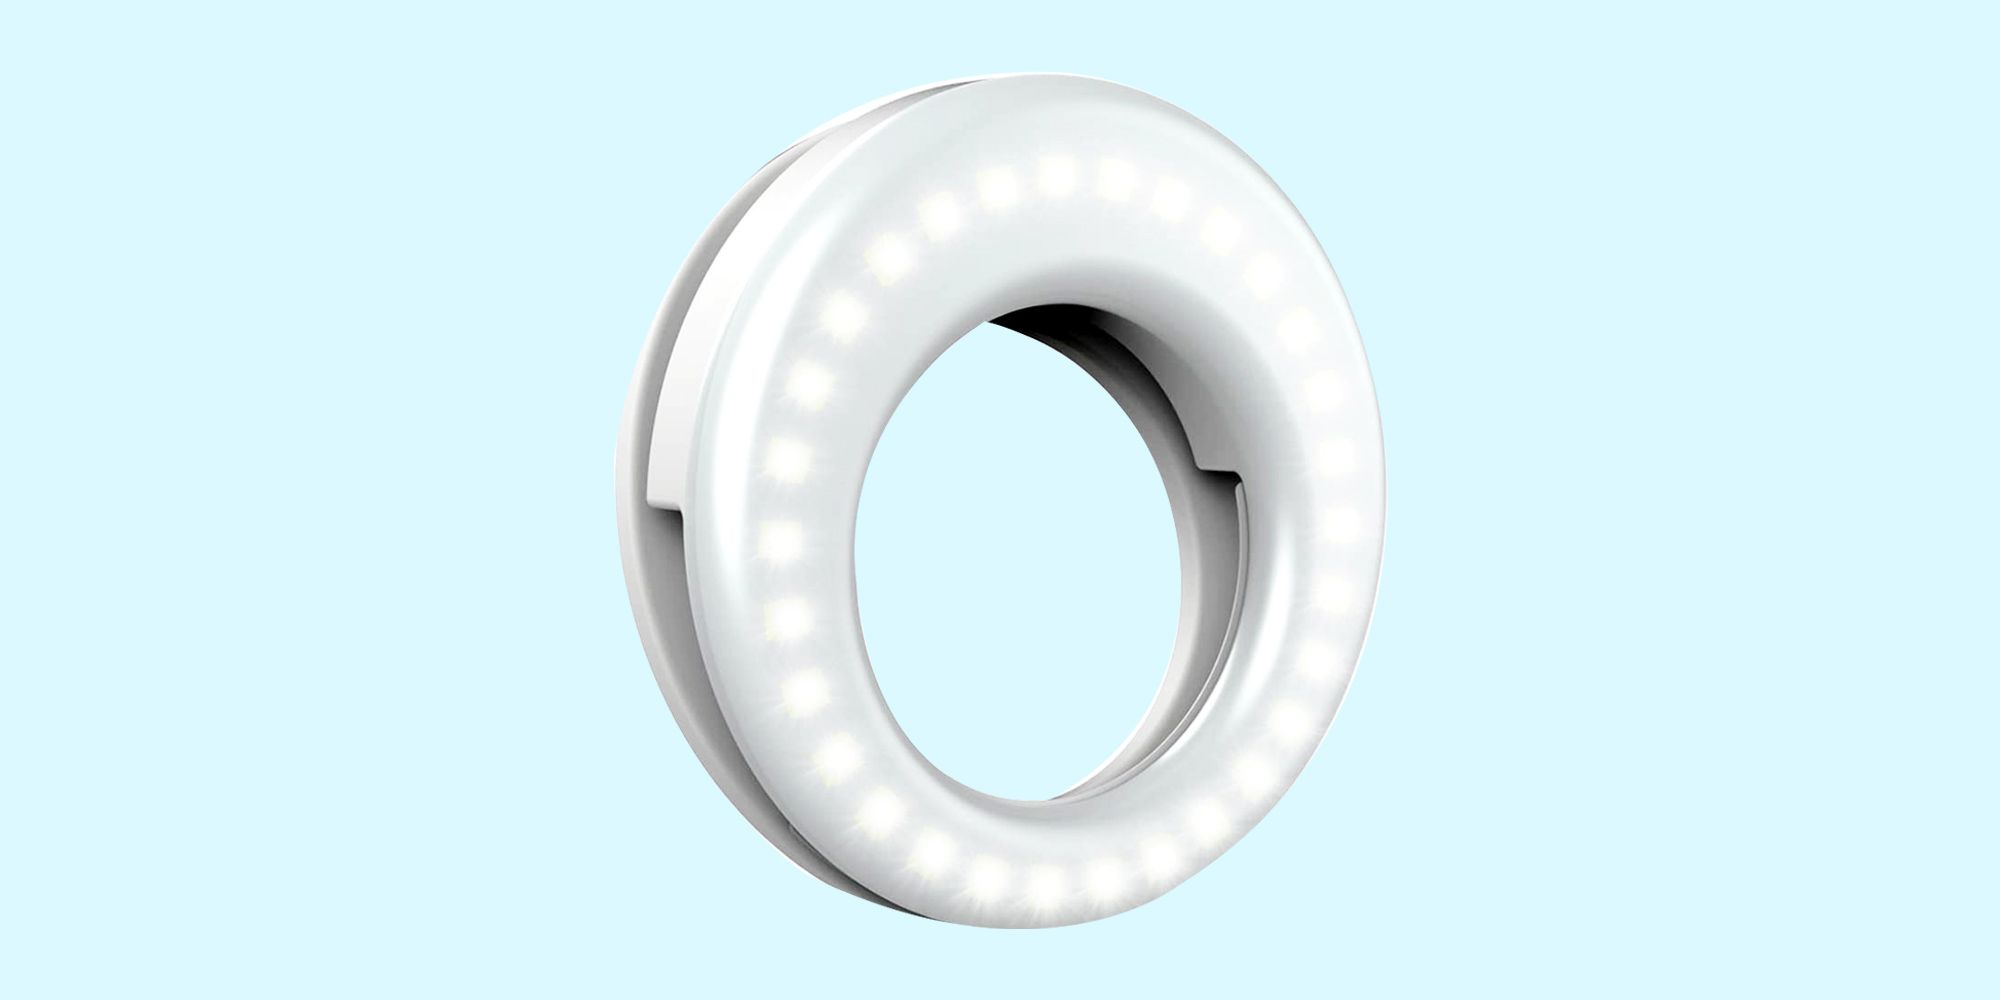 Brilliant Ideas Star Shaped Vlogging Ring Light 8 Inch Diameter NEW In Box.  | eBay